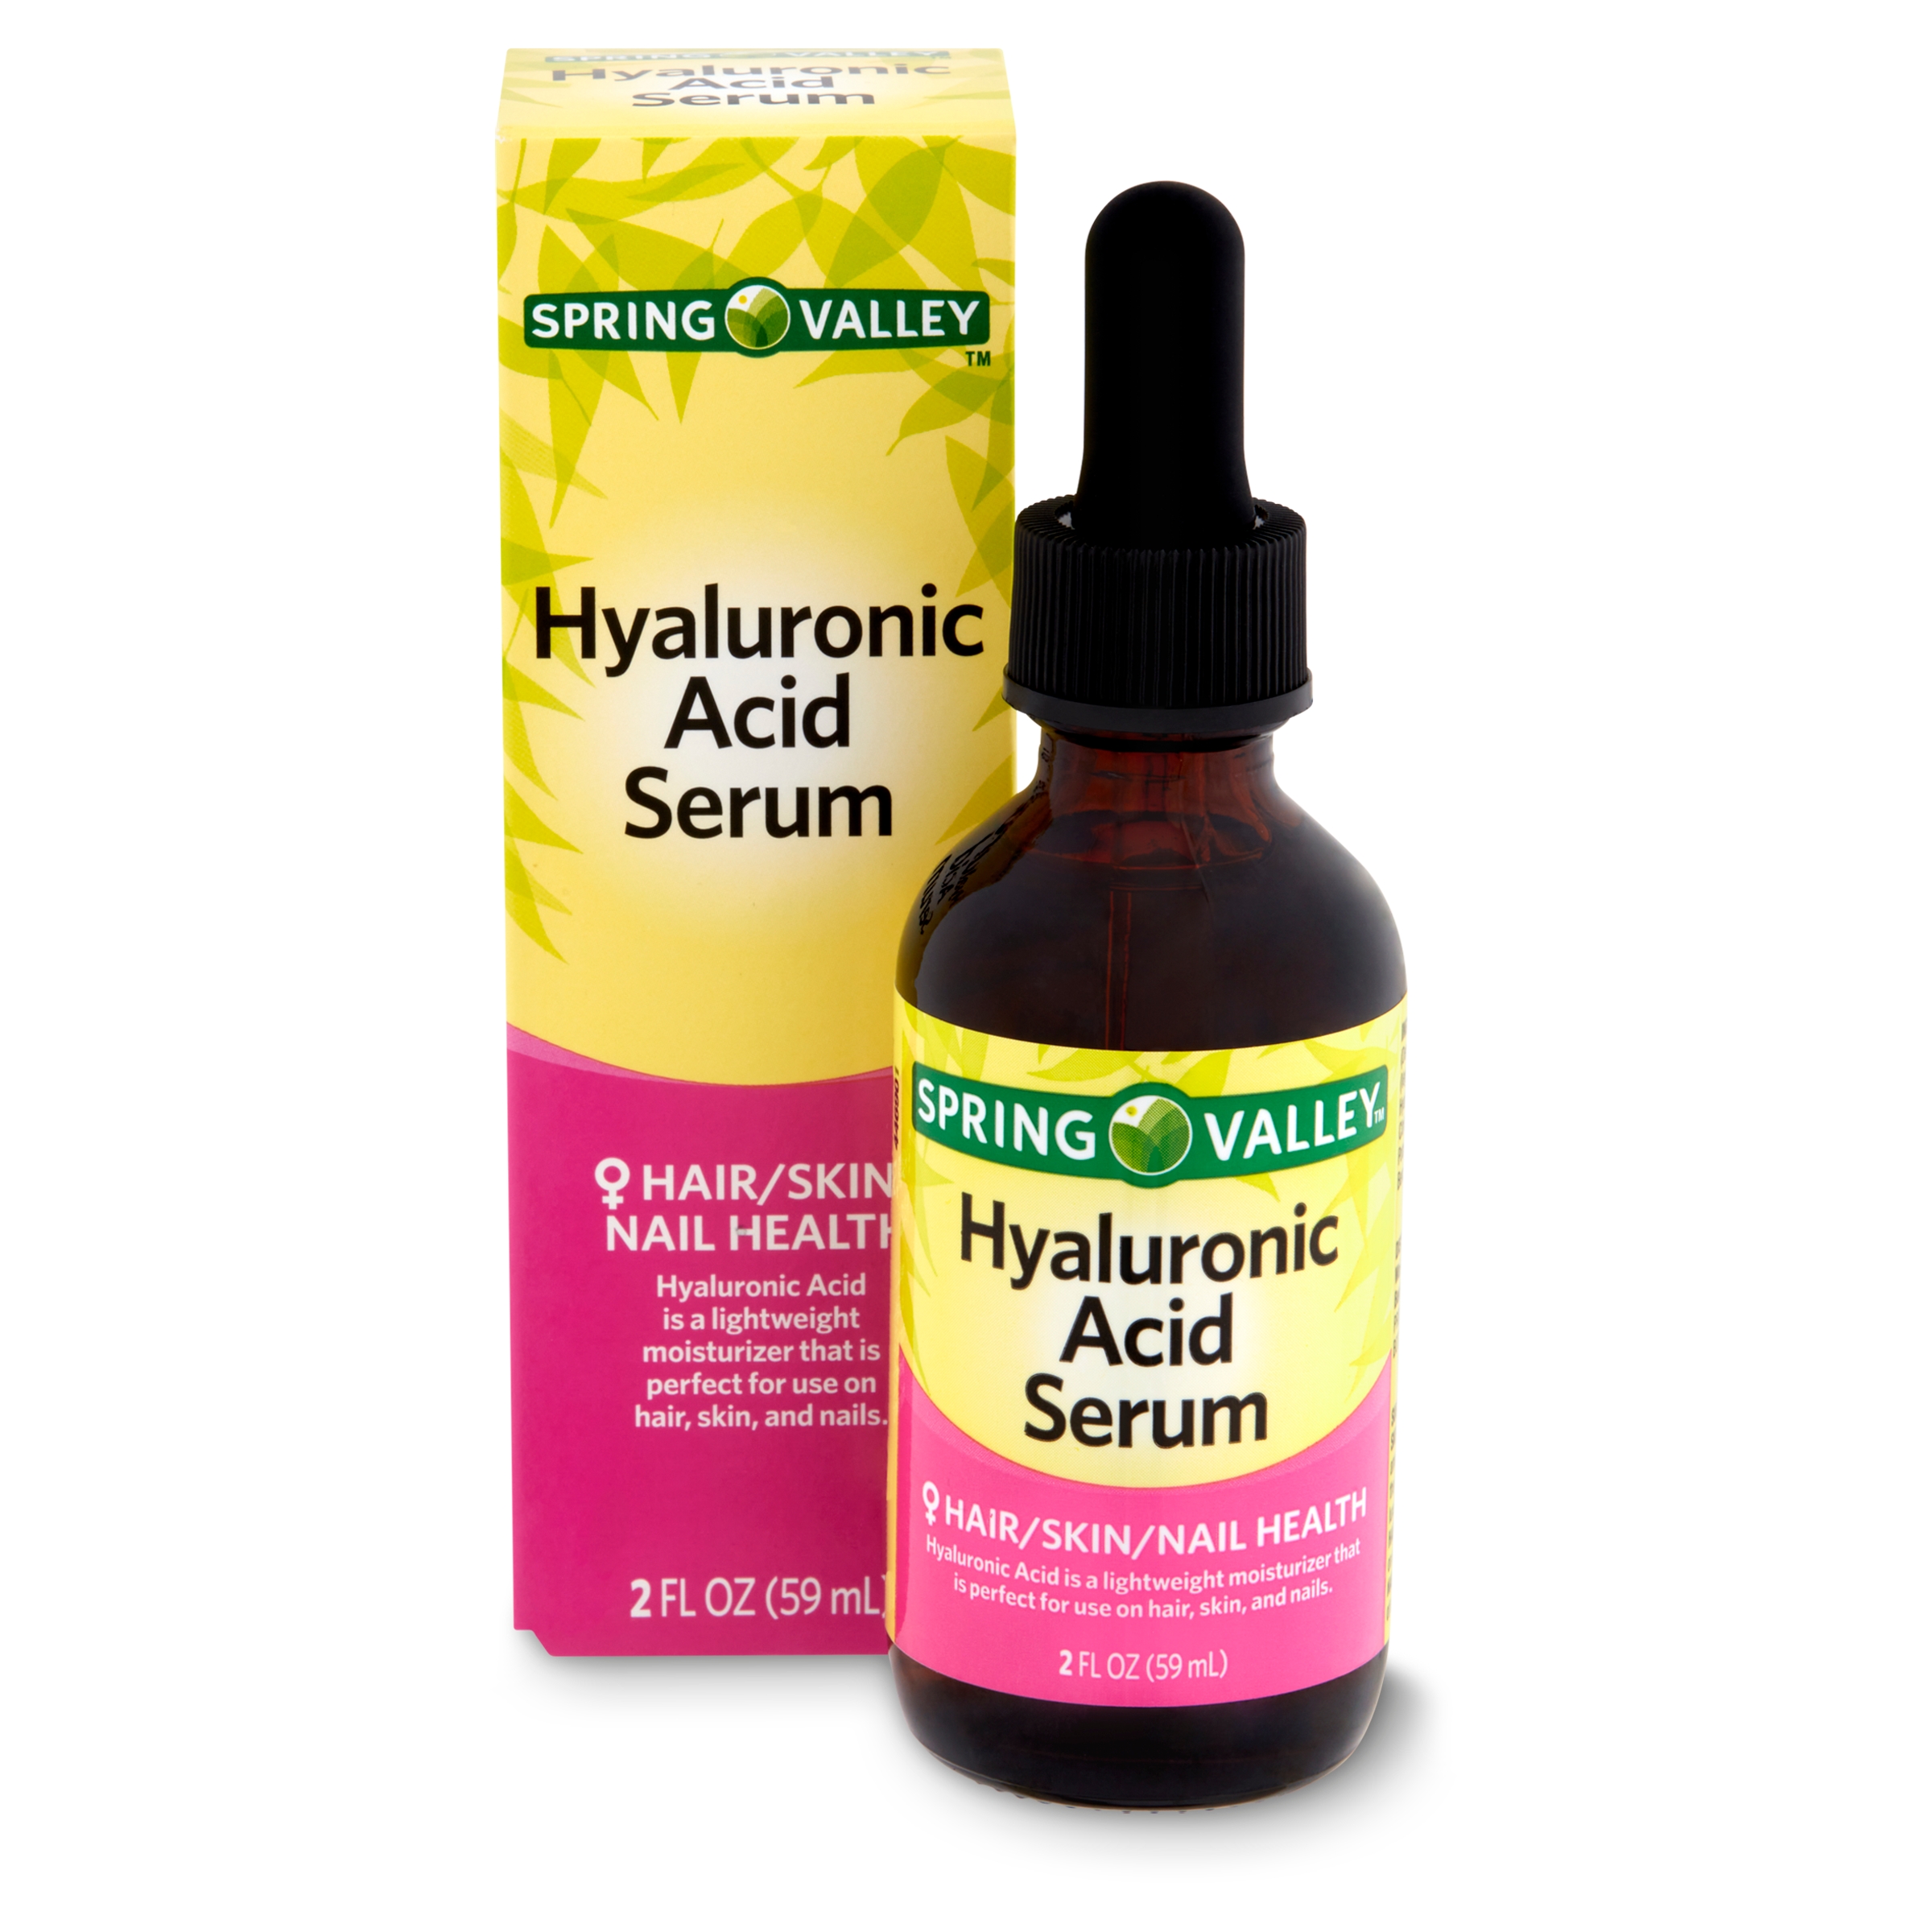 Spring Valley Hyaluronic Acid Serum, 2 fl oz - image 5 of 9